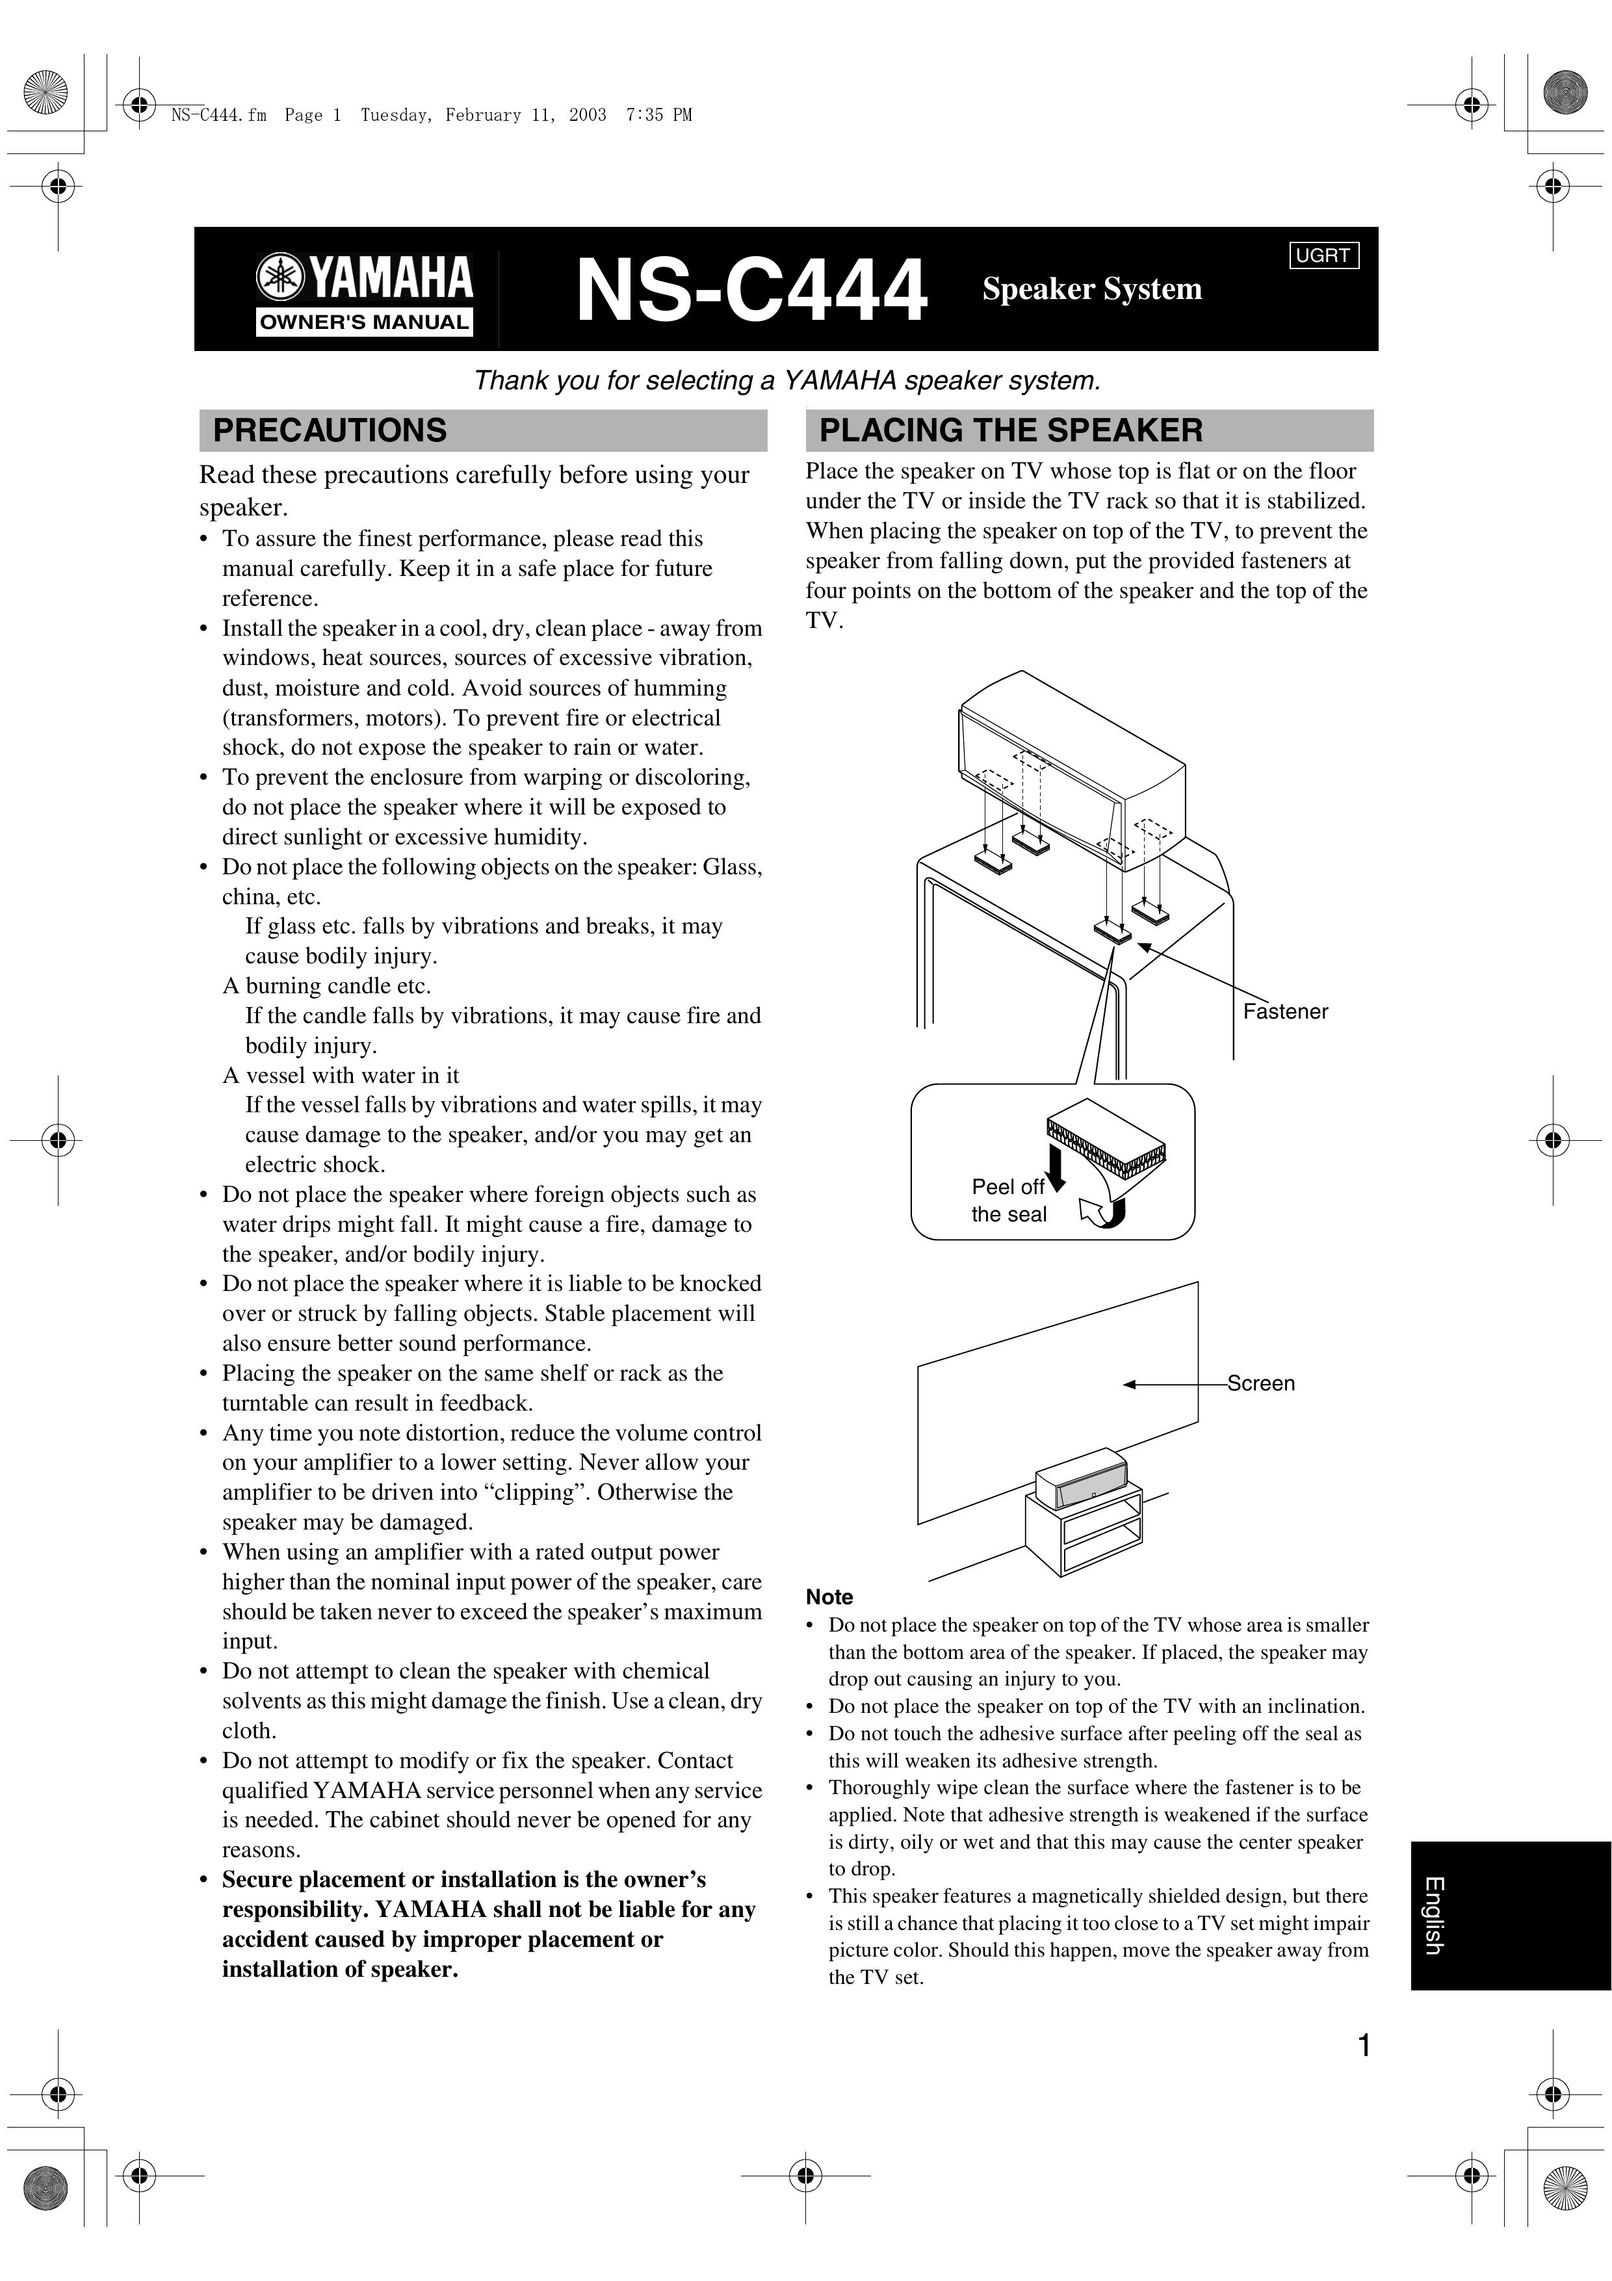 Yamaha NS-C444 Speaker User Manual